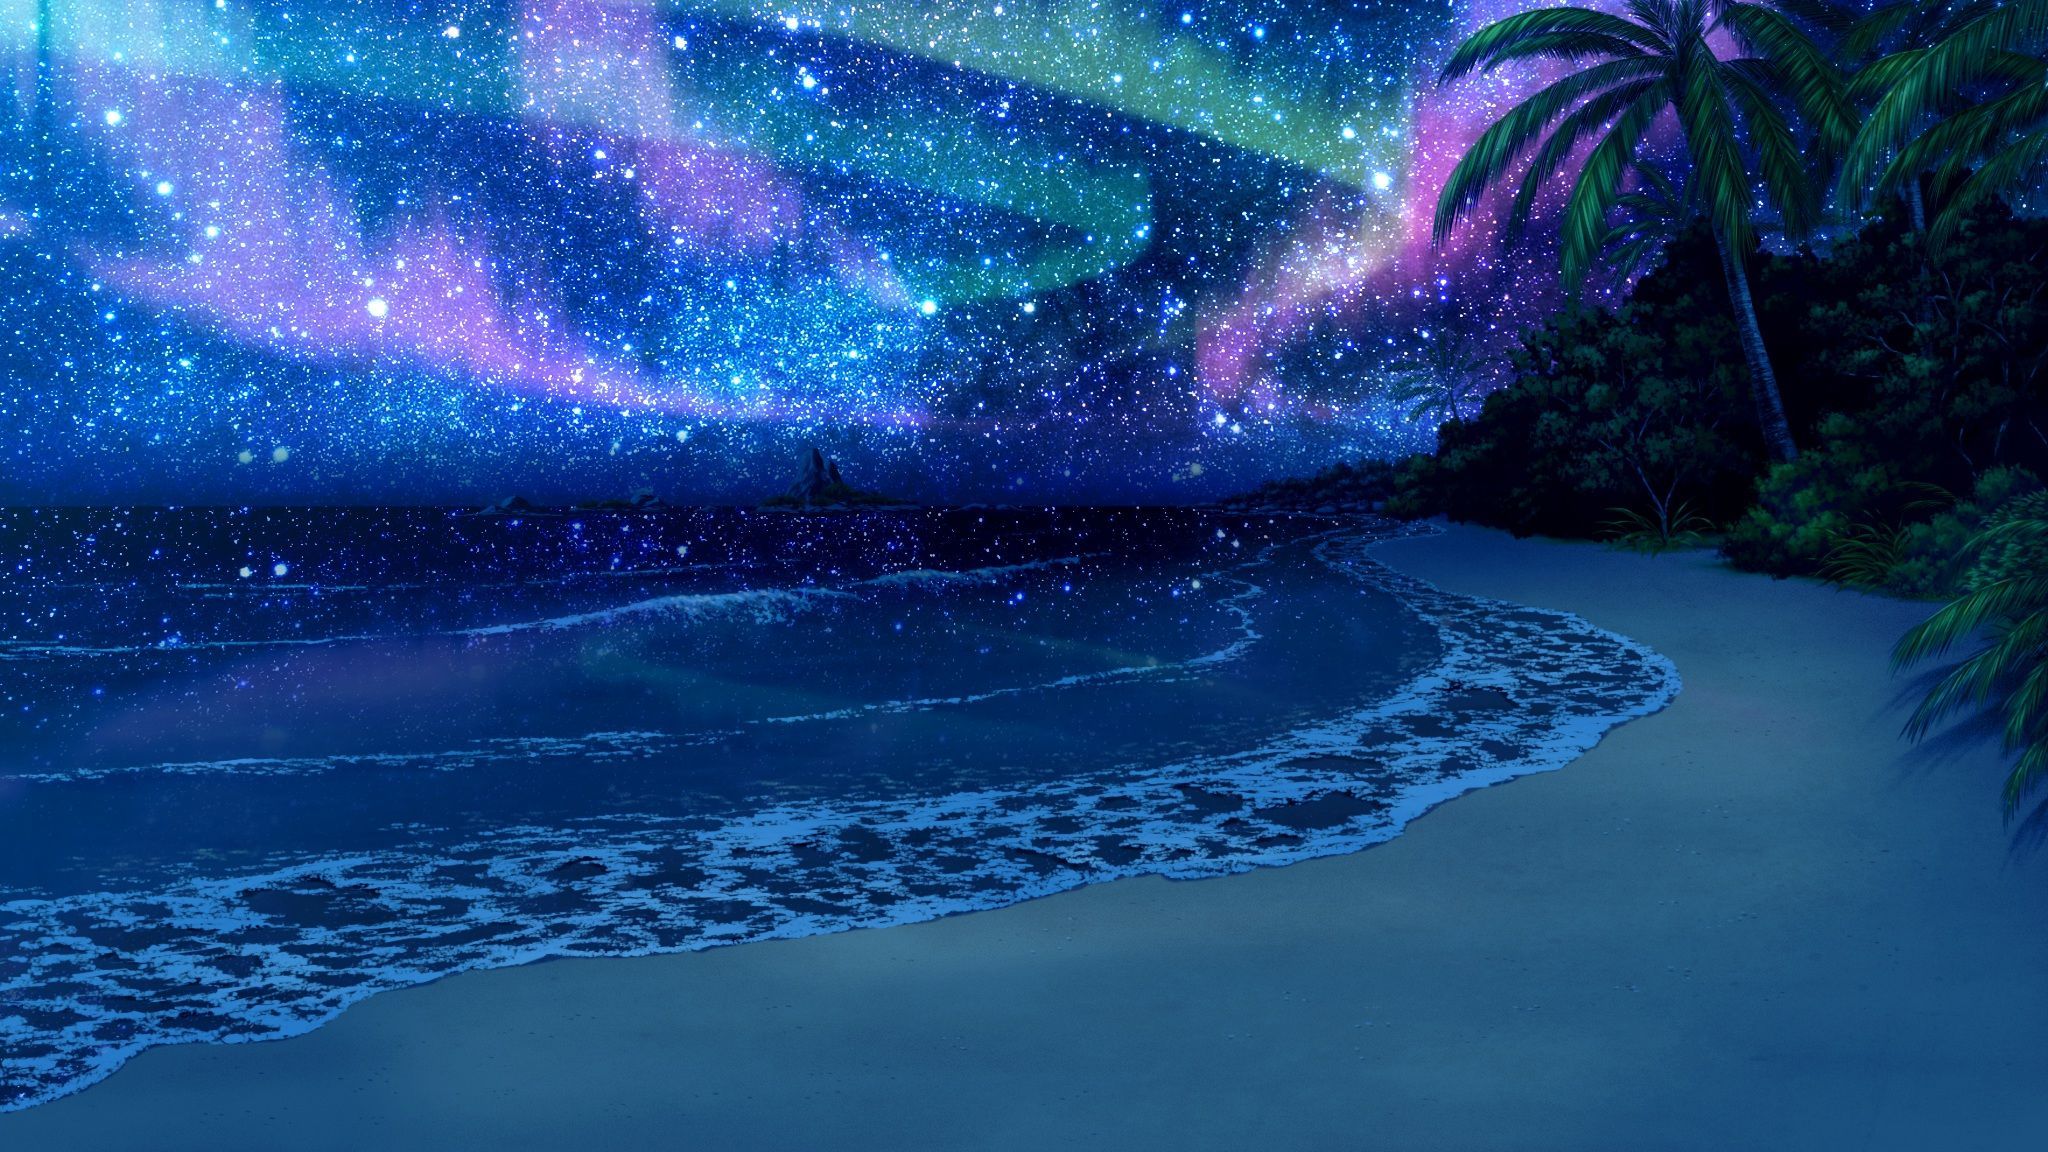 Beach Scenery At Night wallpaper. Anime scenery, Beach scenery, Anime background